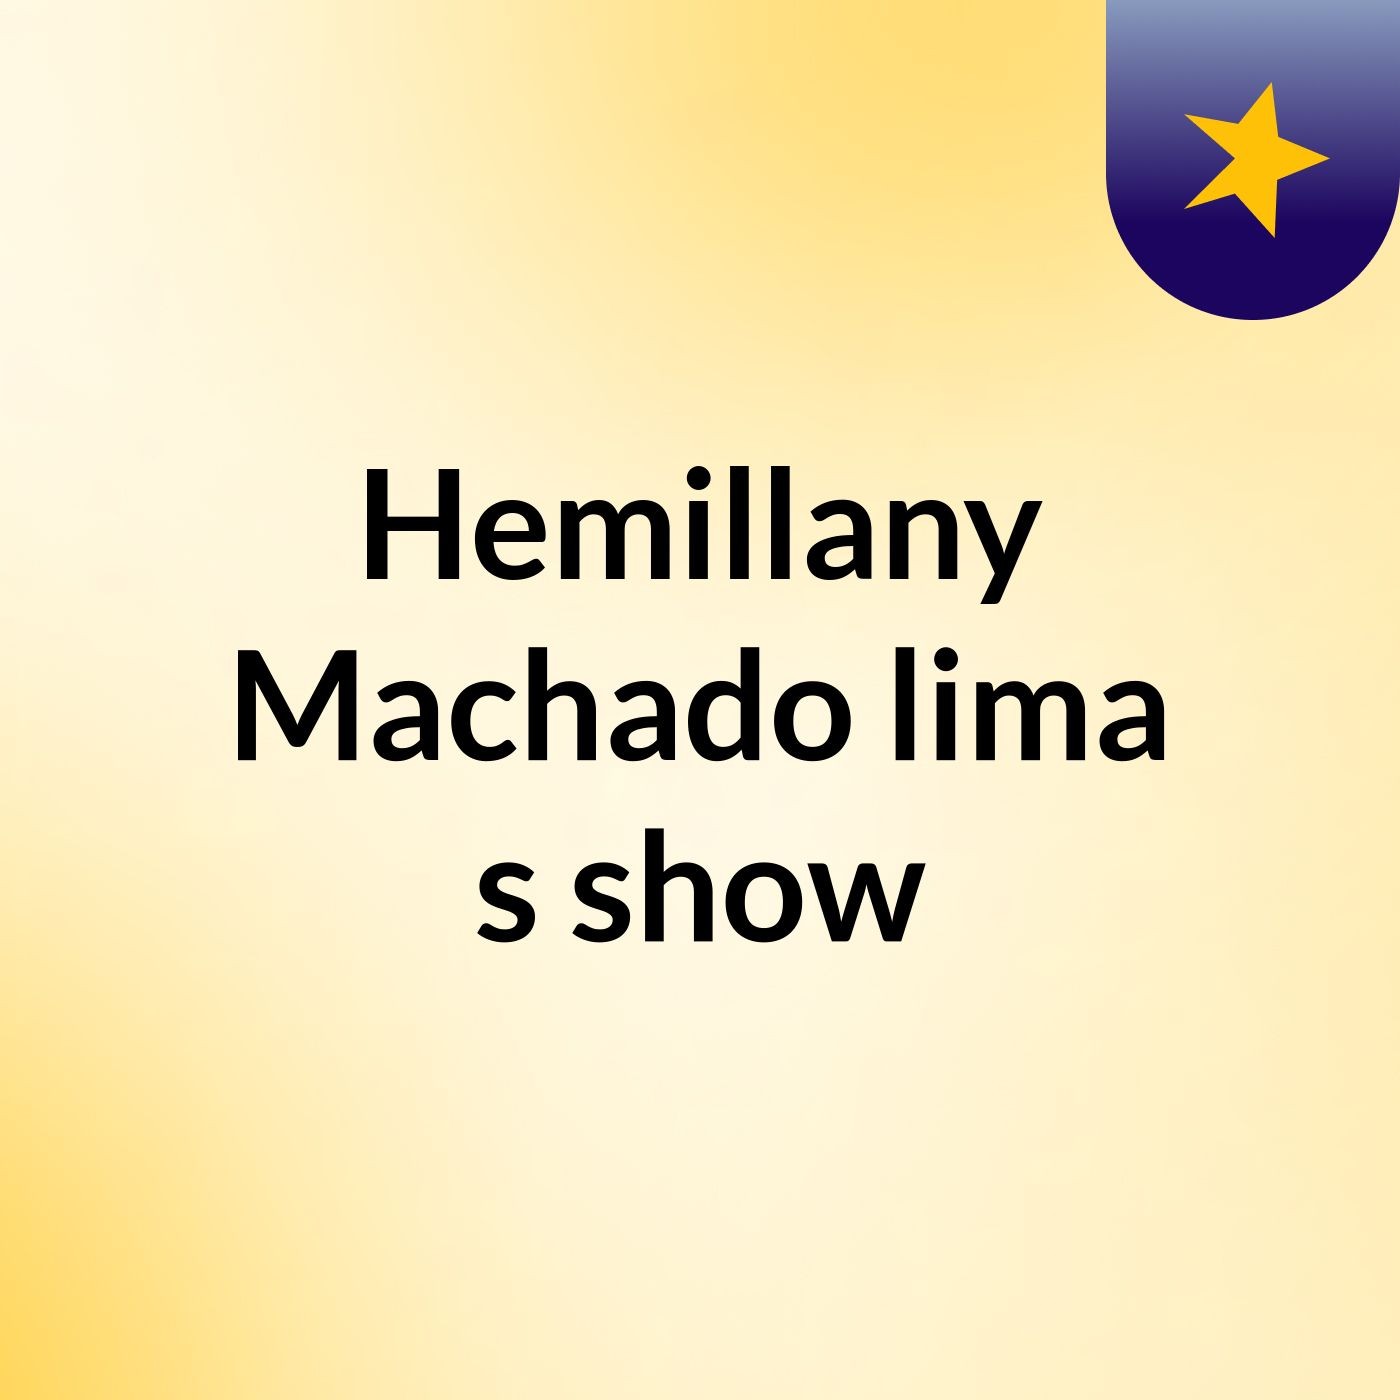 Hemillany Machado lima's show